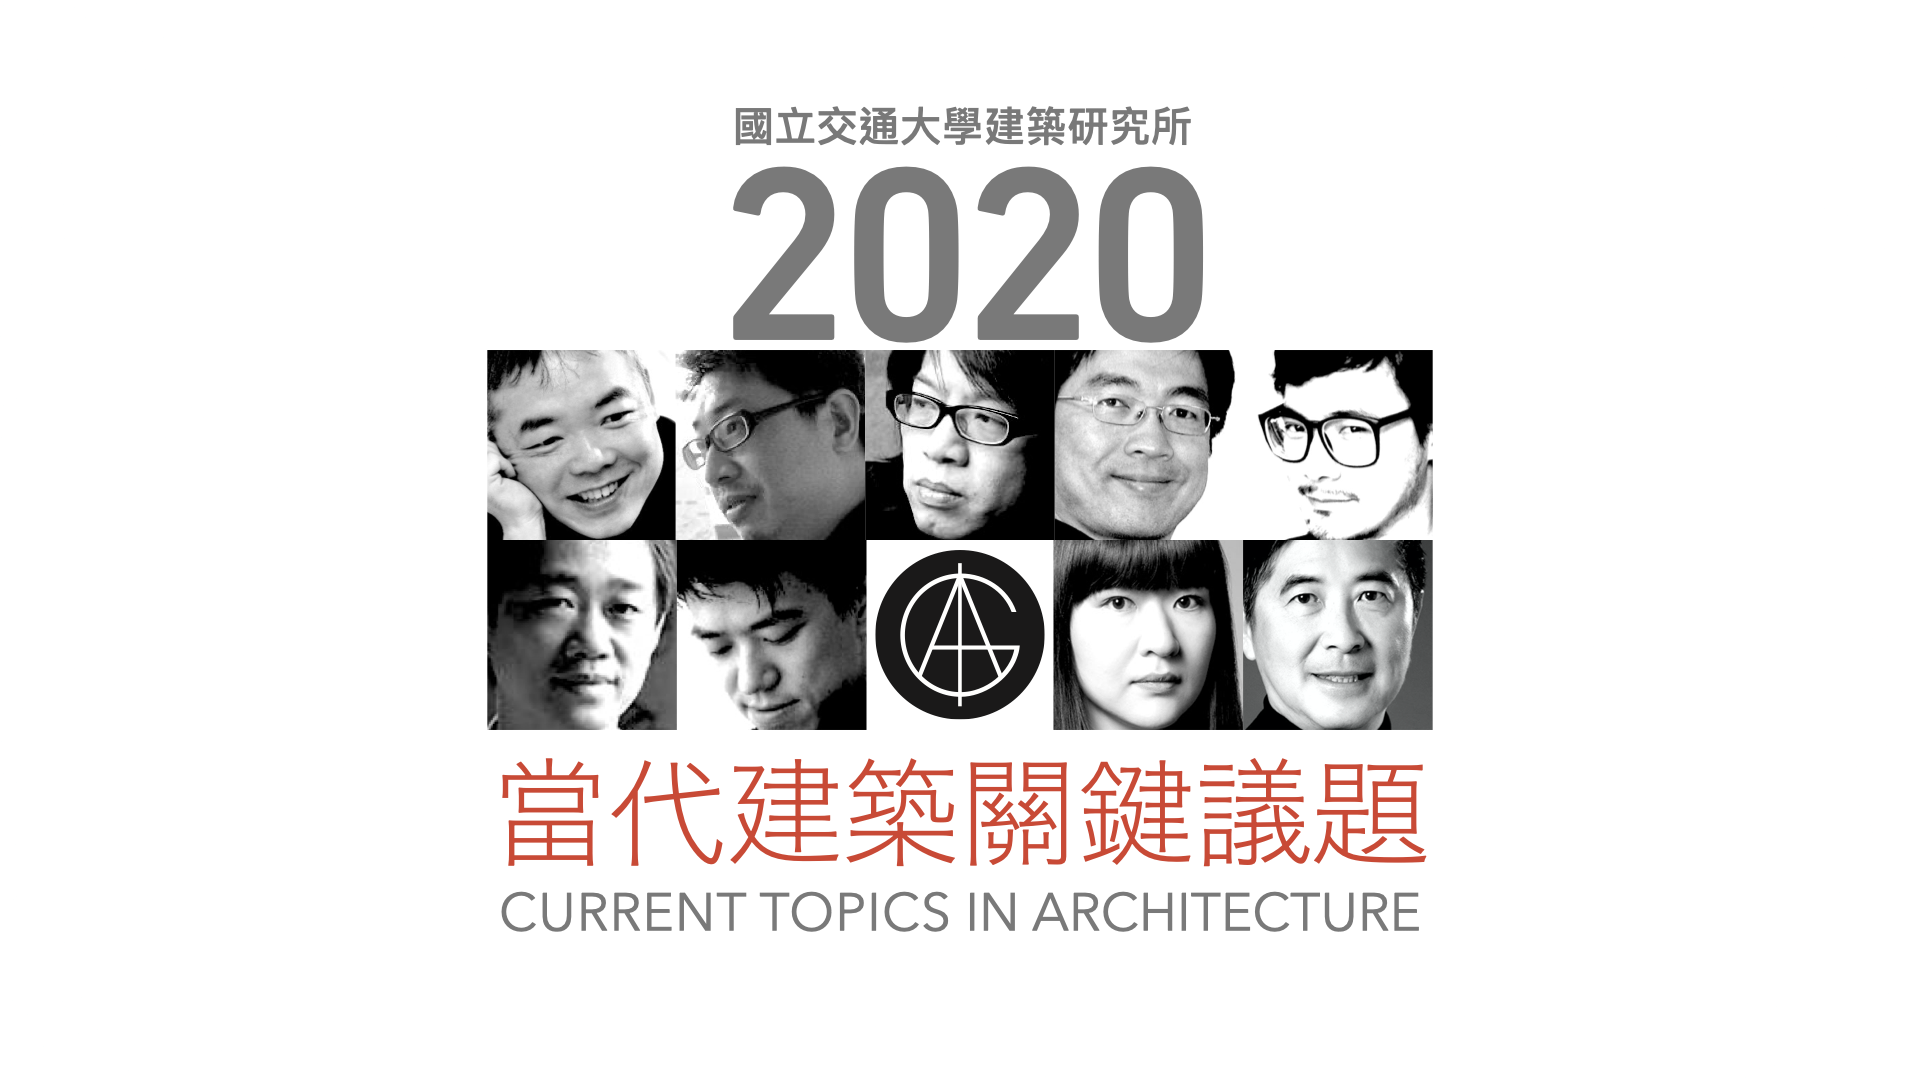 Current Topics in Architecture 2020